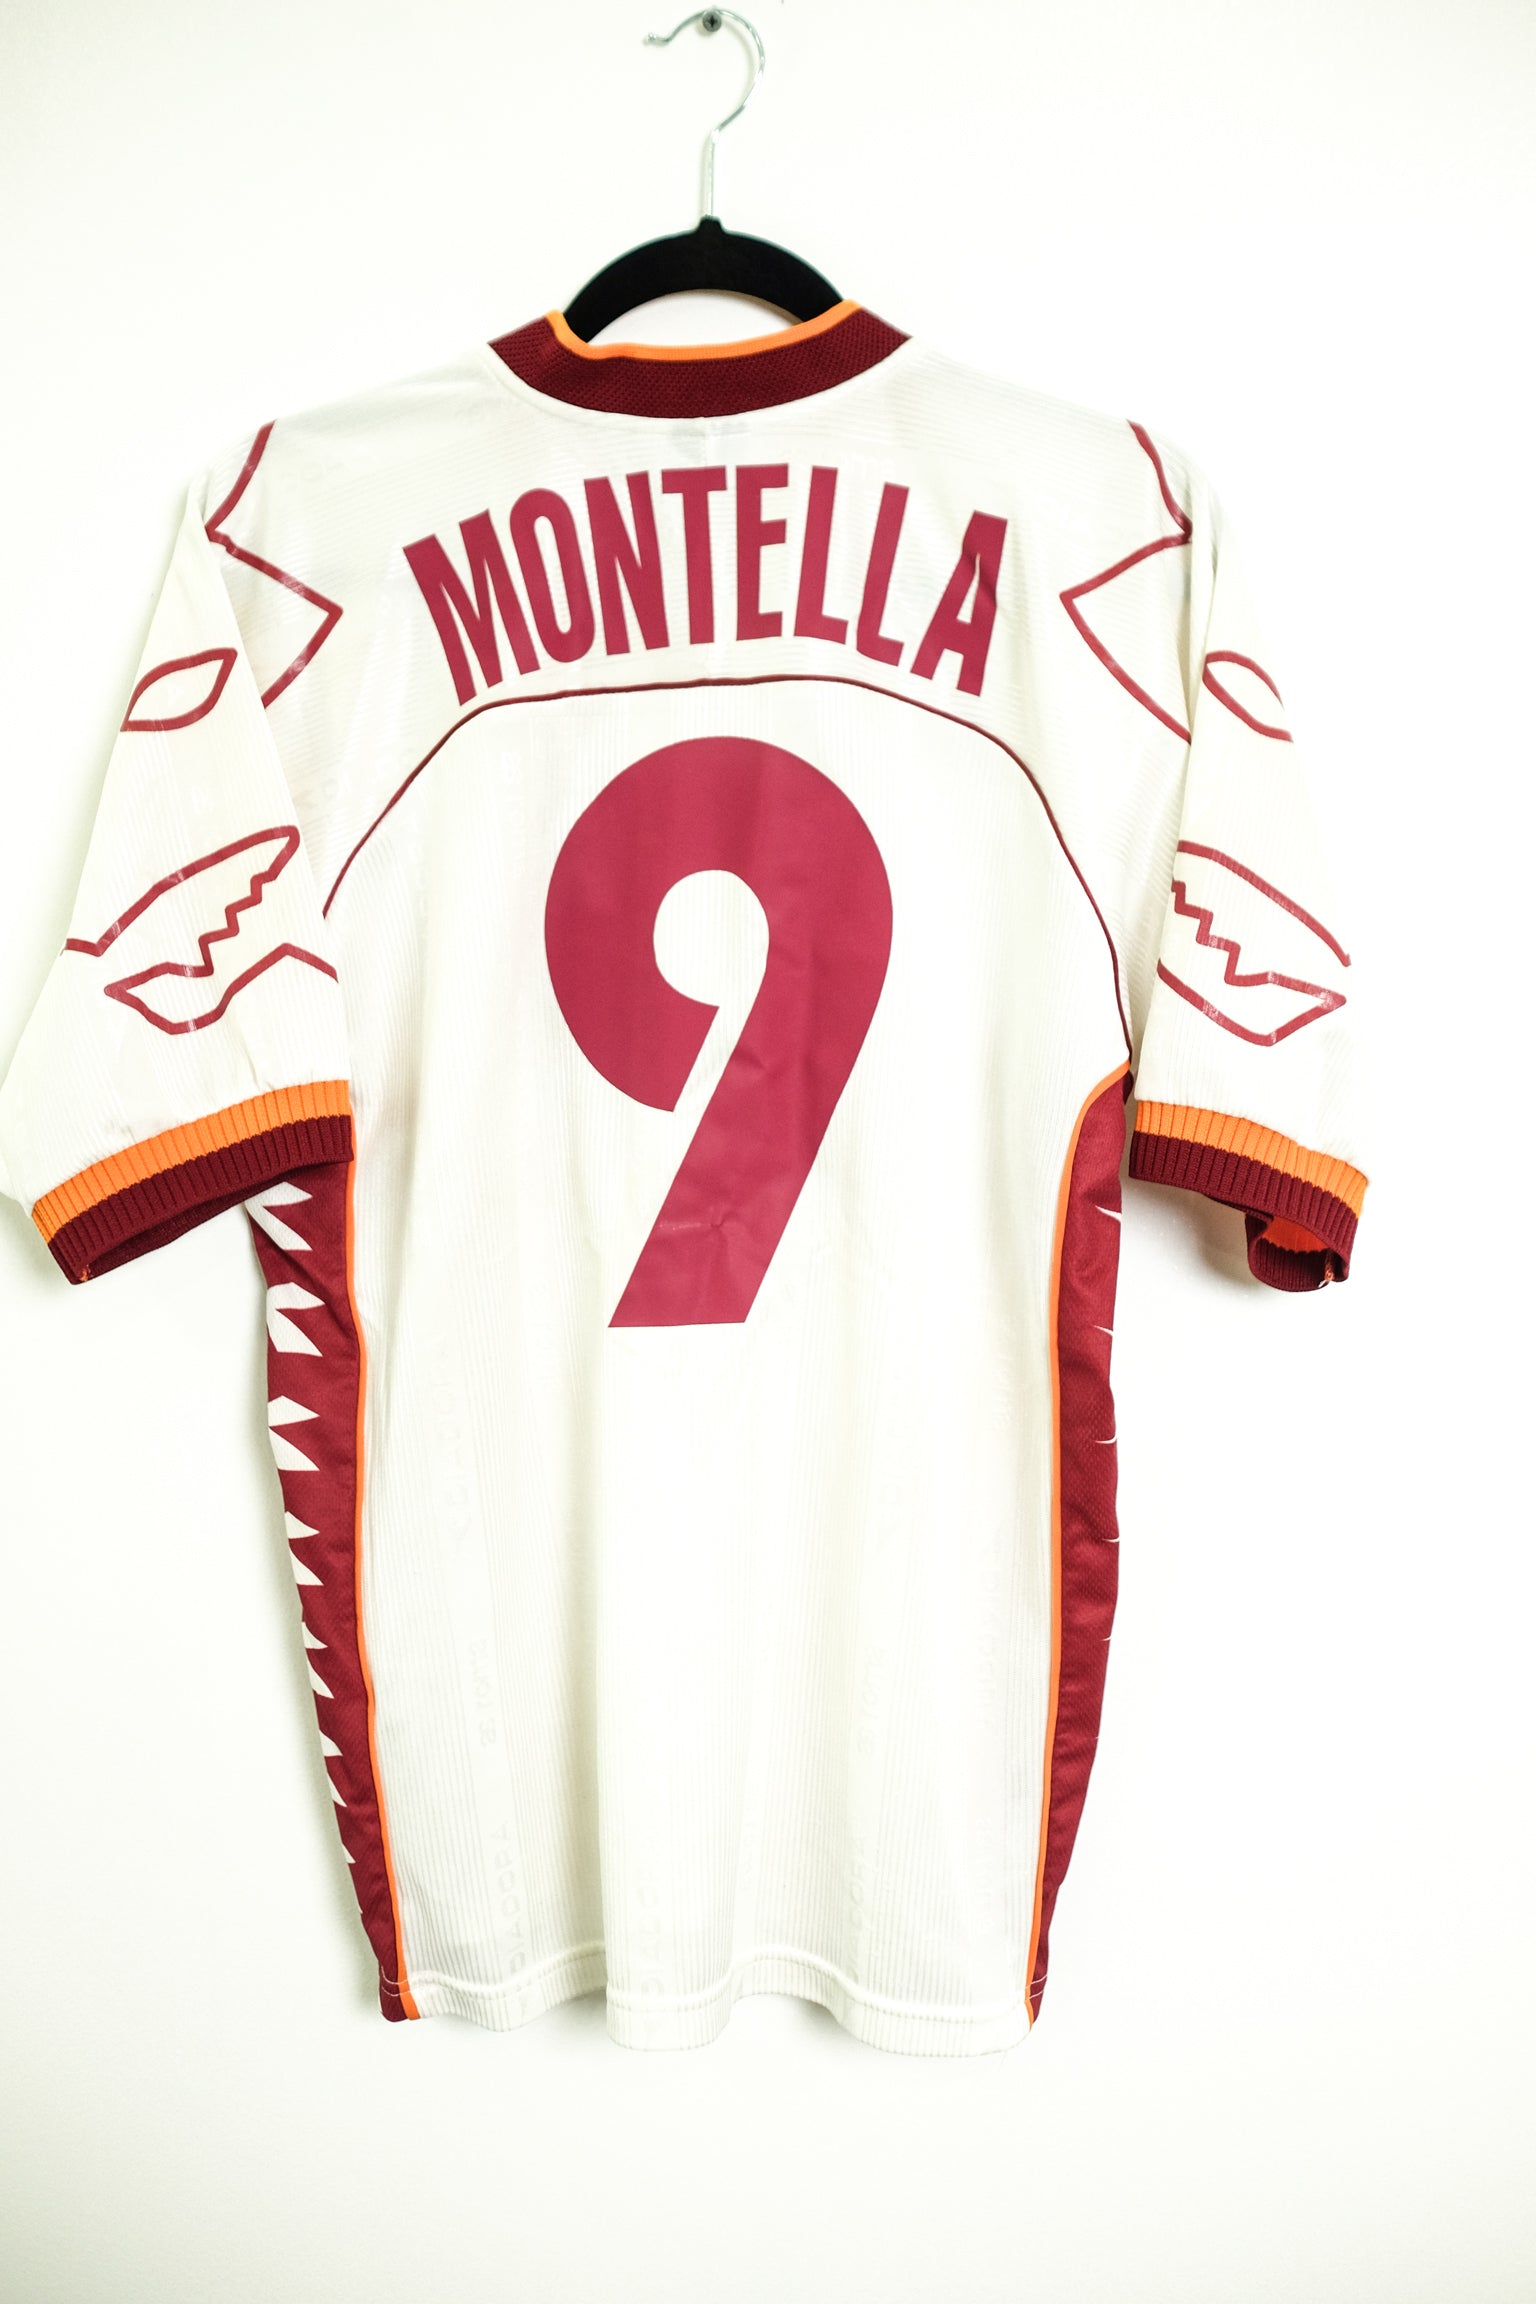 Vincenzo Montella AS Roma jersey